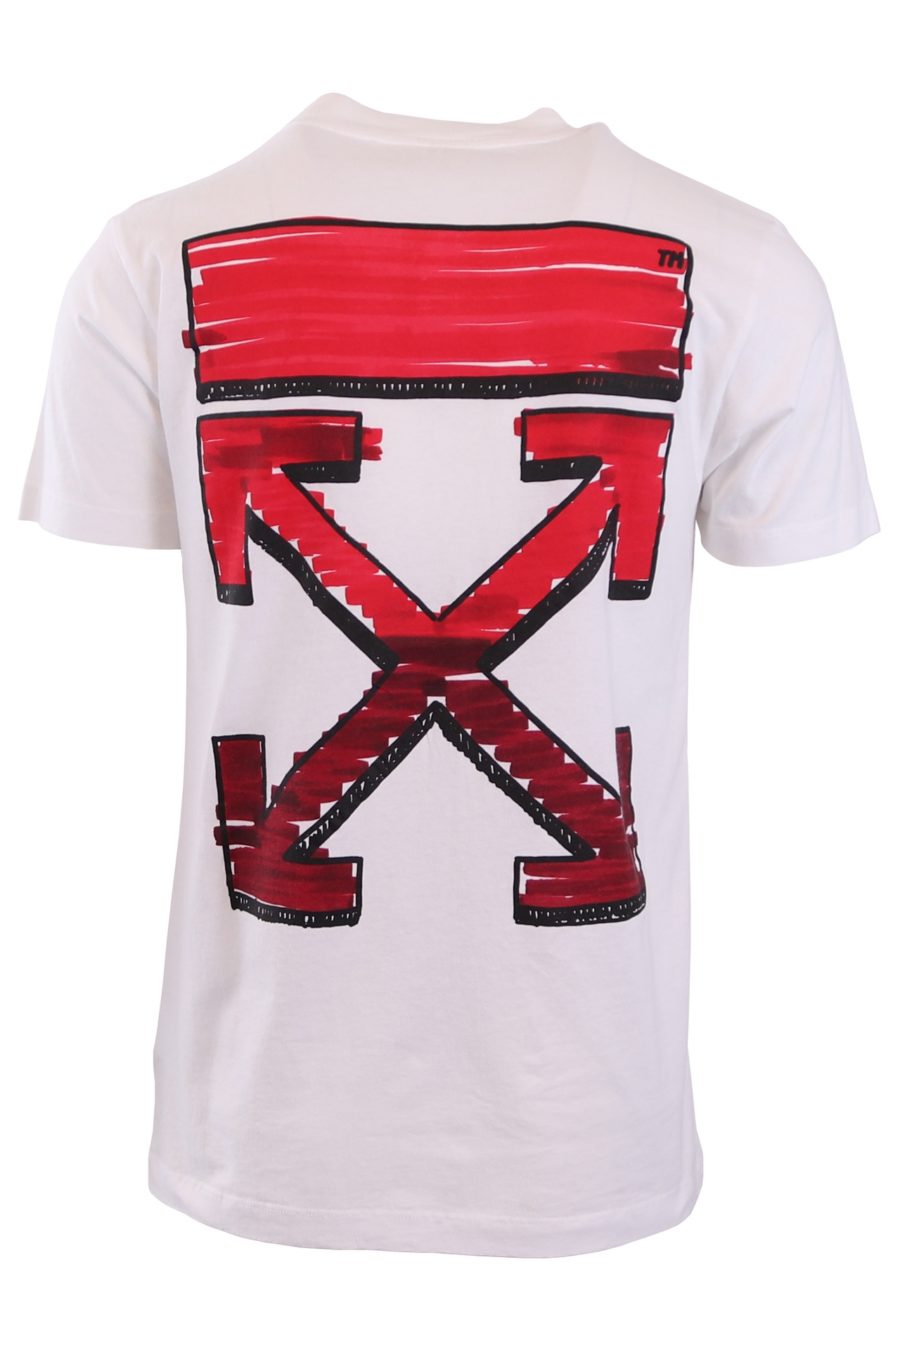 T-shirt Off-White white with red arrows - d4cad3946bec5e0140592f51109232e91ce06430